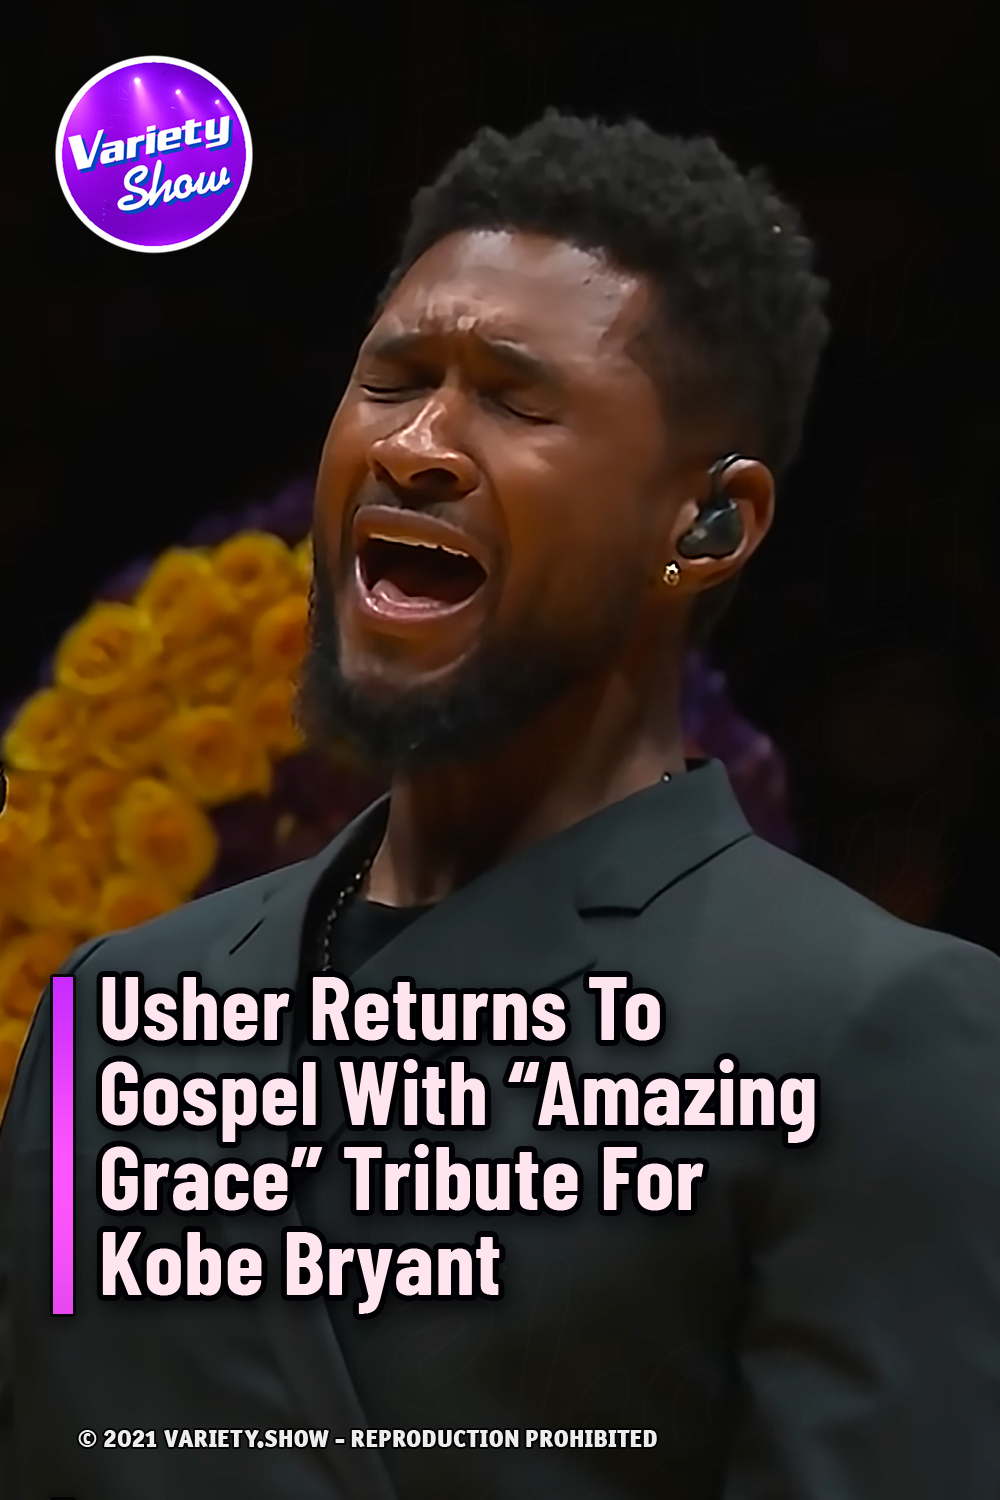 Usher Returns To Gospel With “Amazing Grace” Tribute For Kobe Bryant